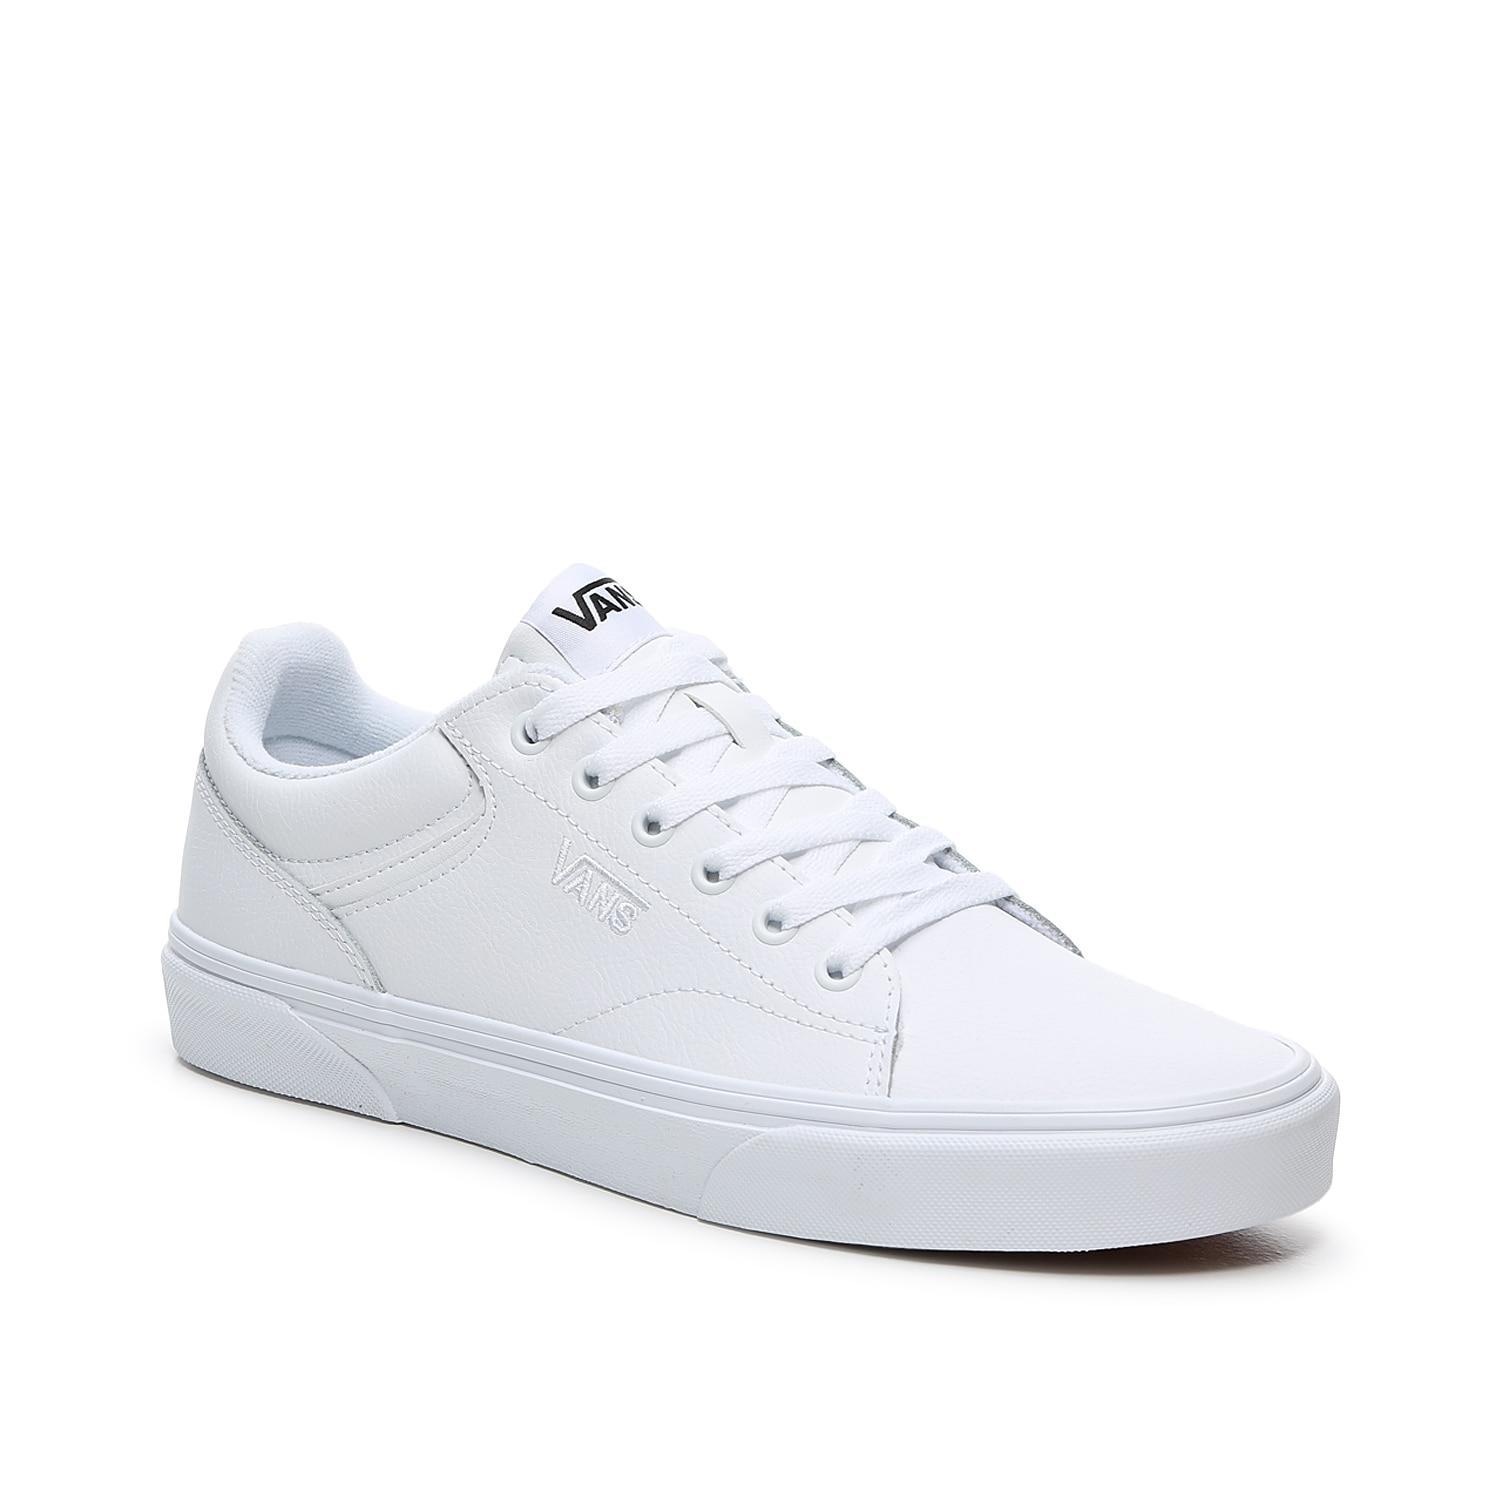 Vans Seldan Mens Leather Shoes White Product Image